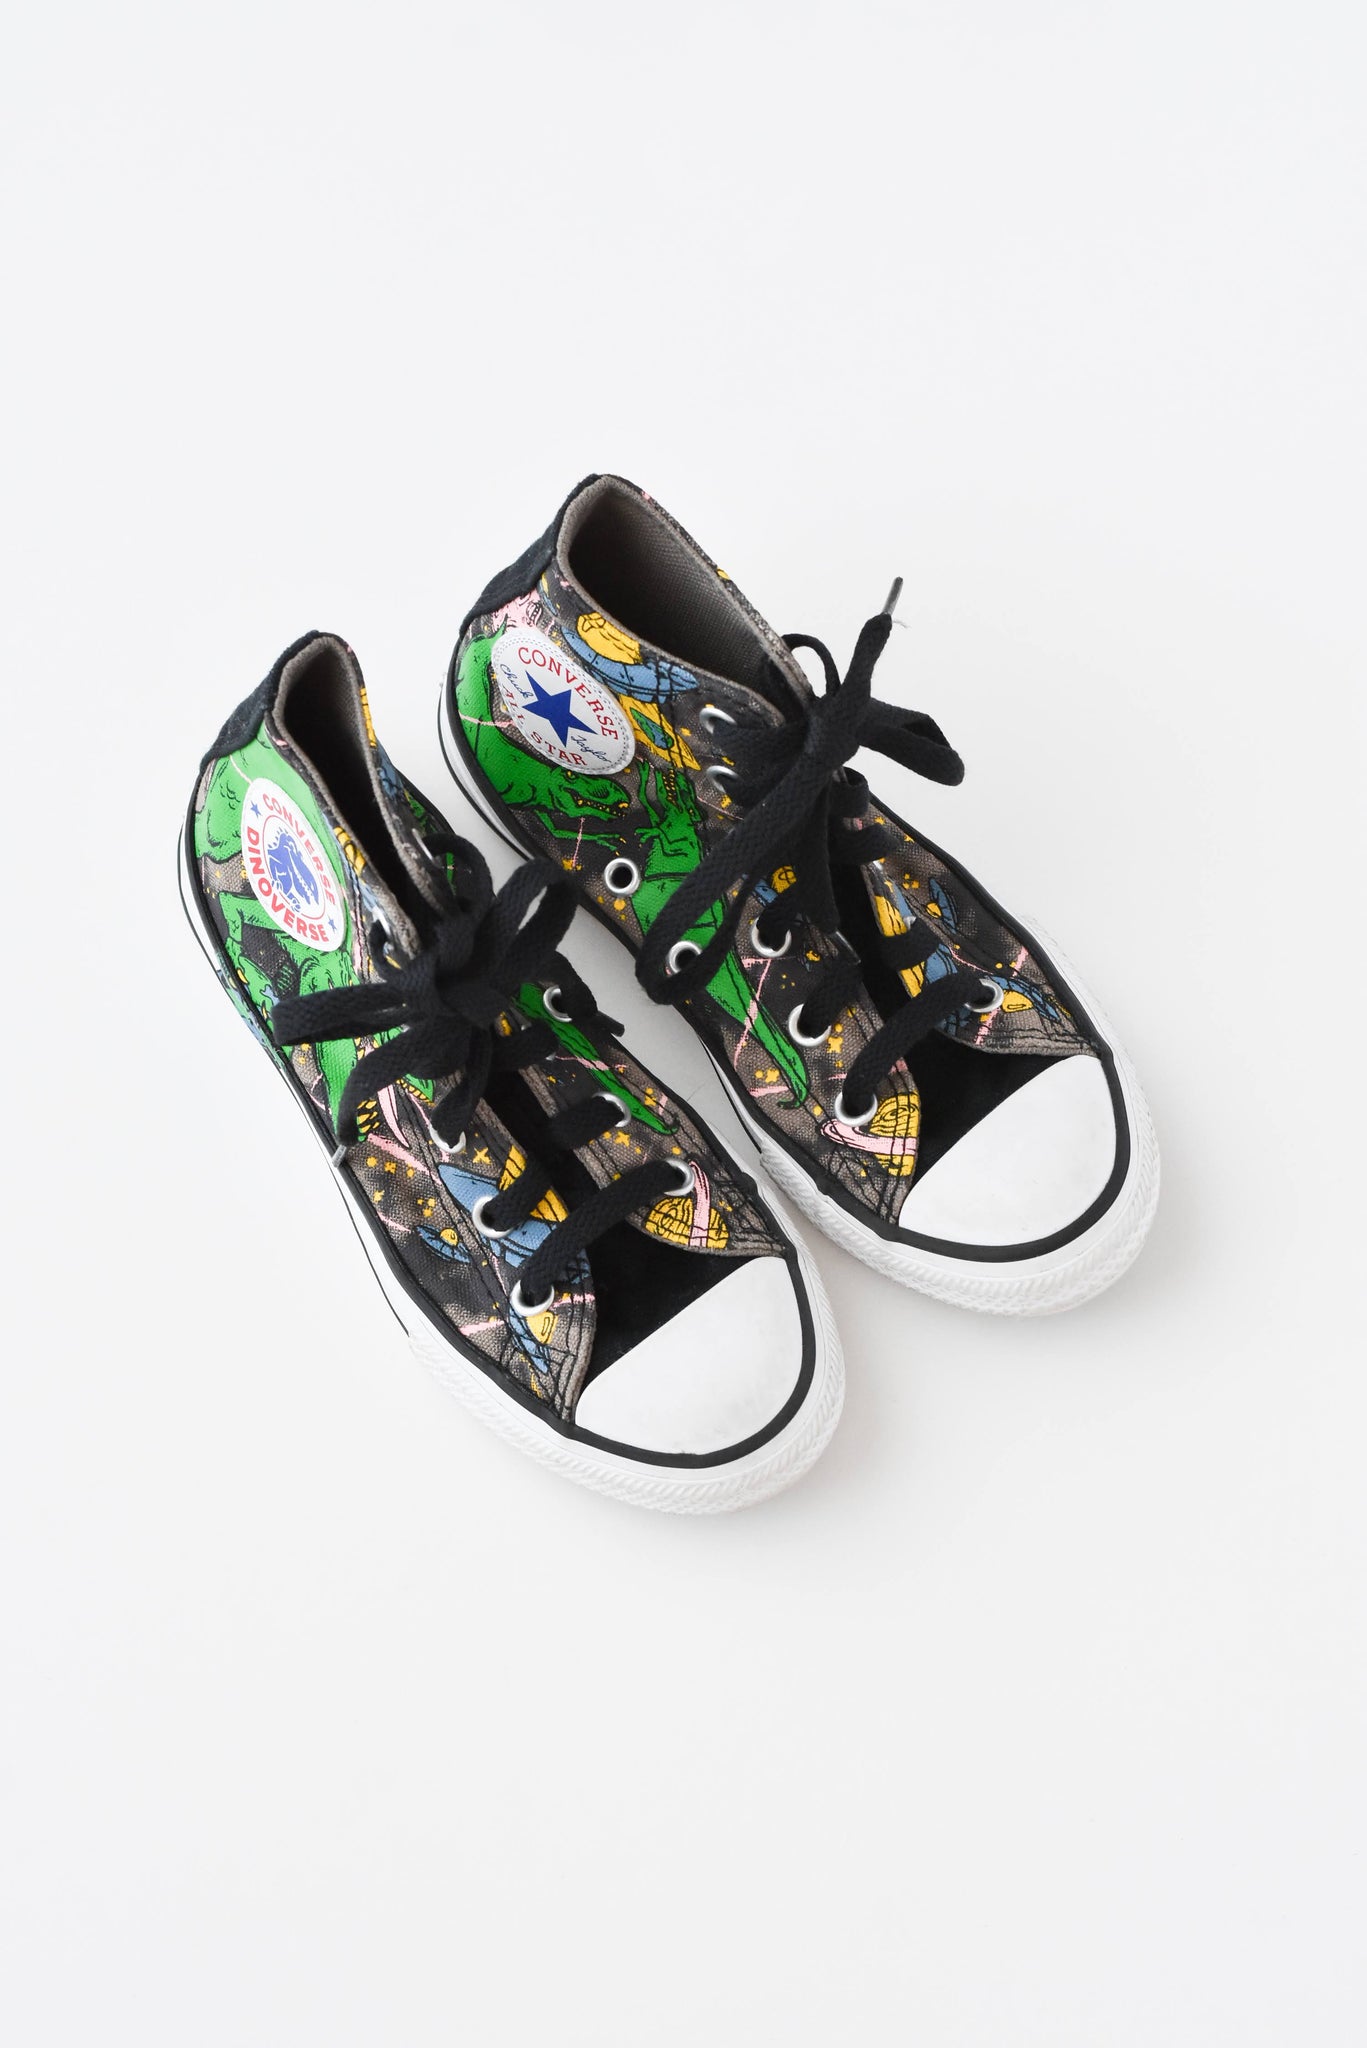 Dinosaur Converse Shoes • 11.5c